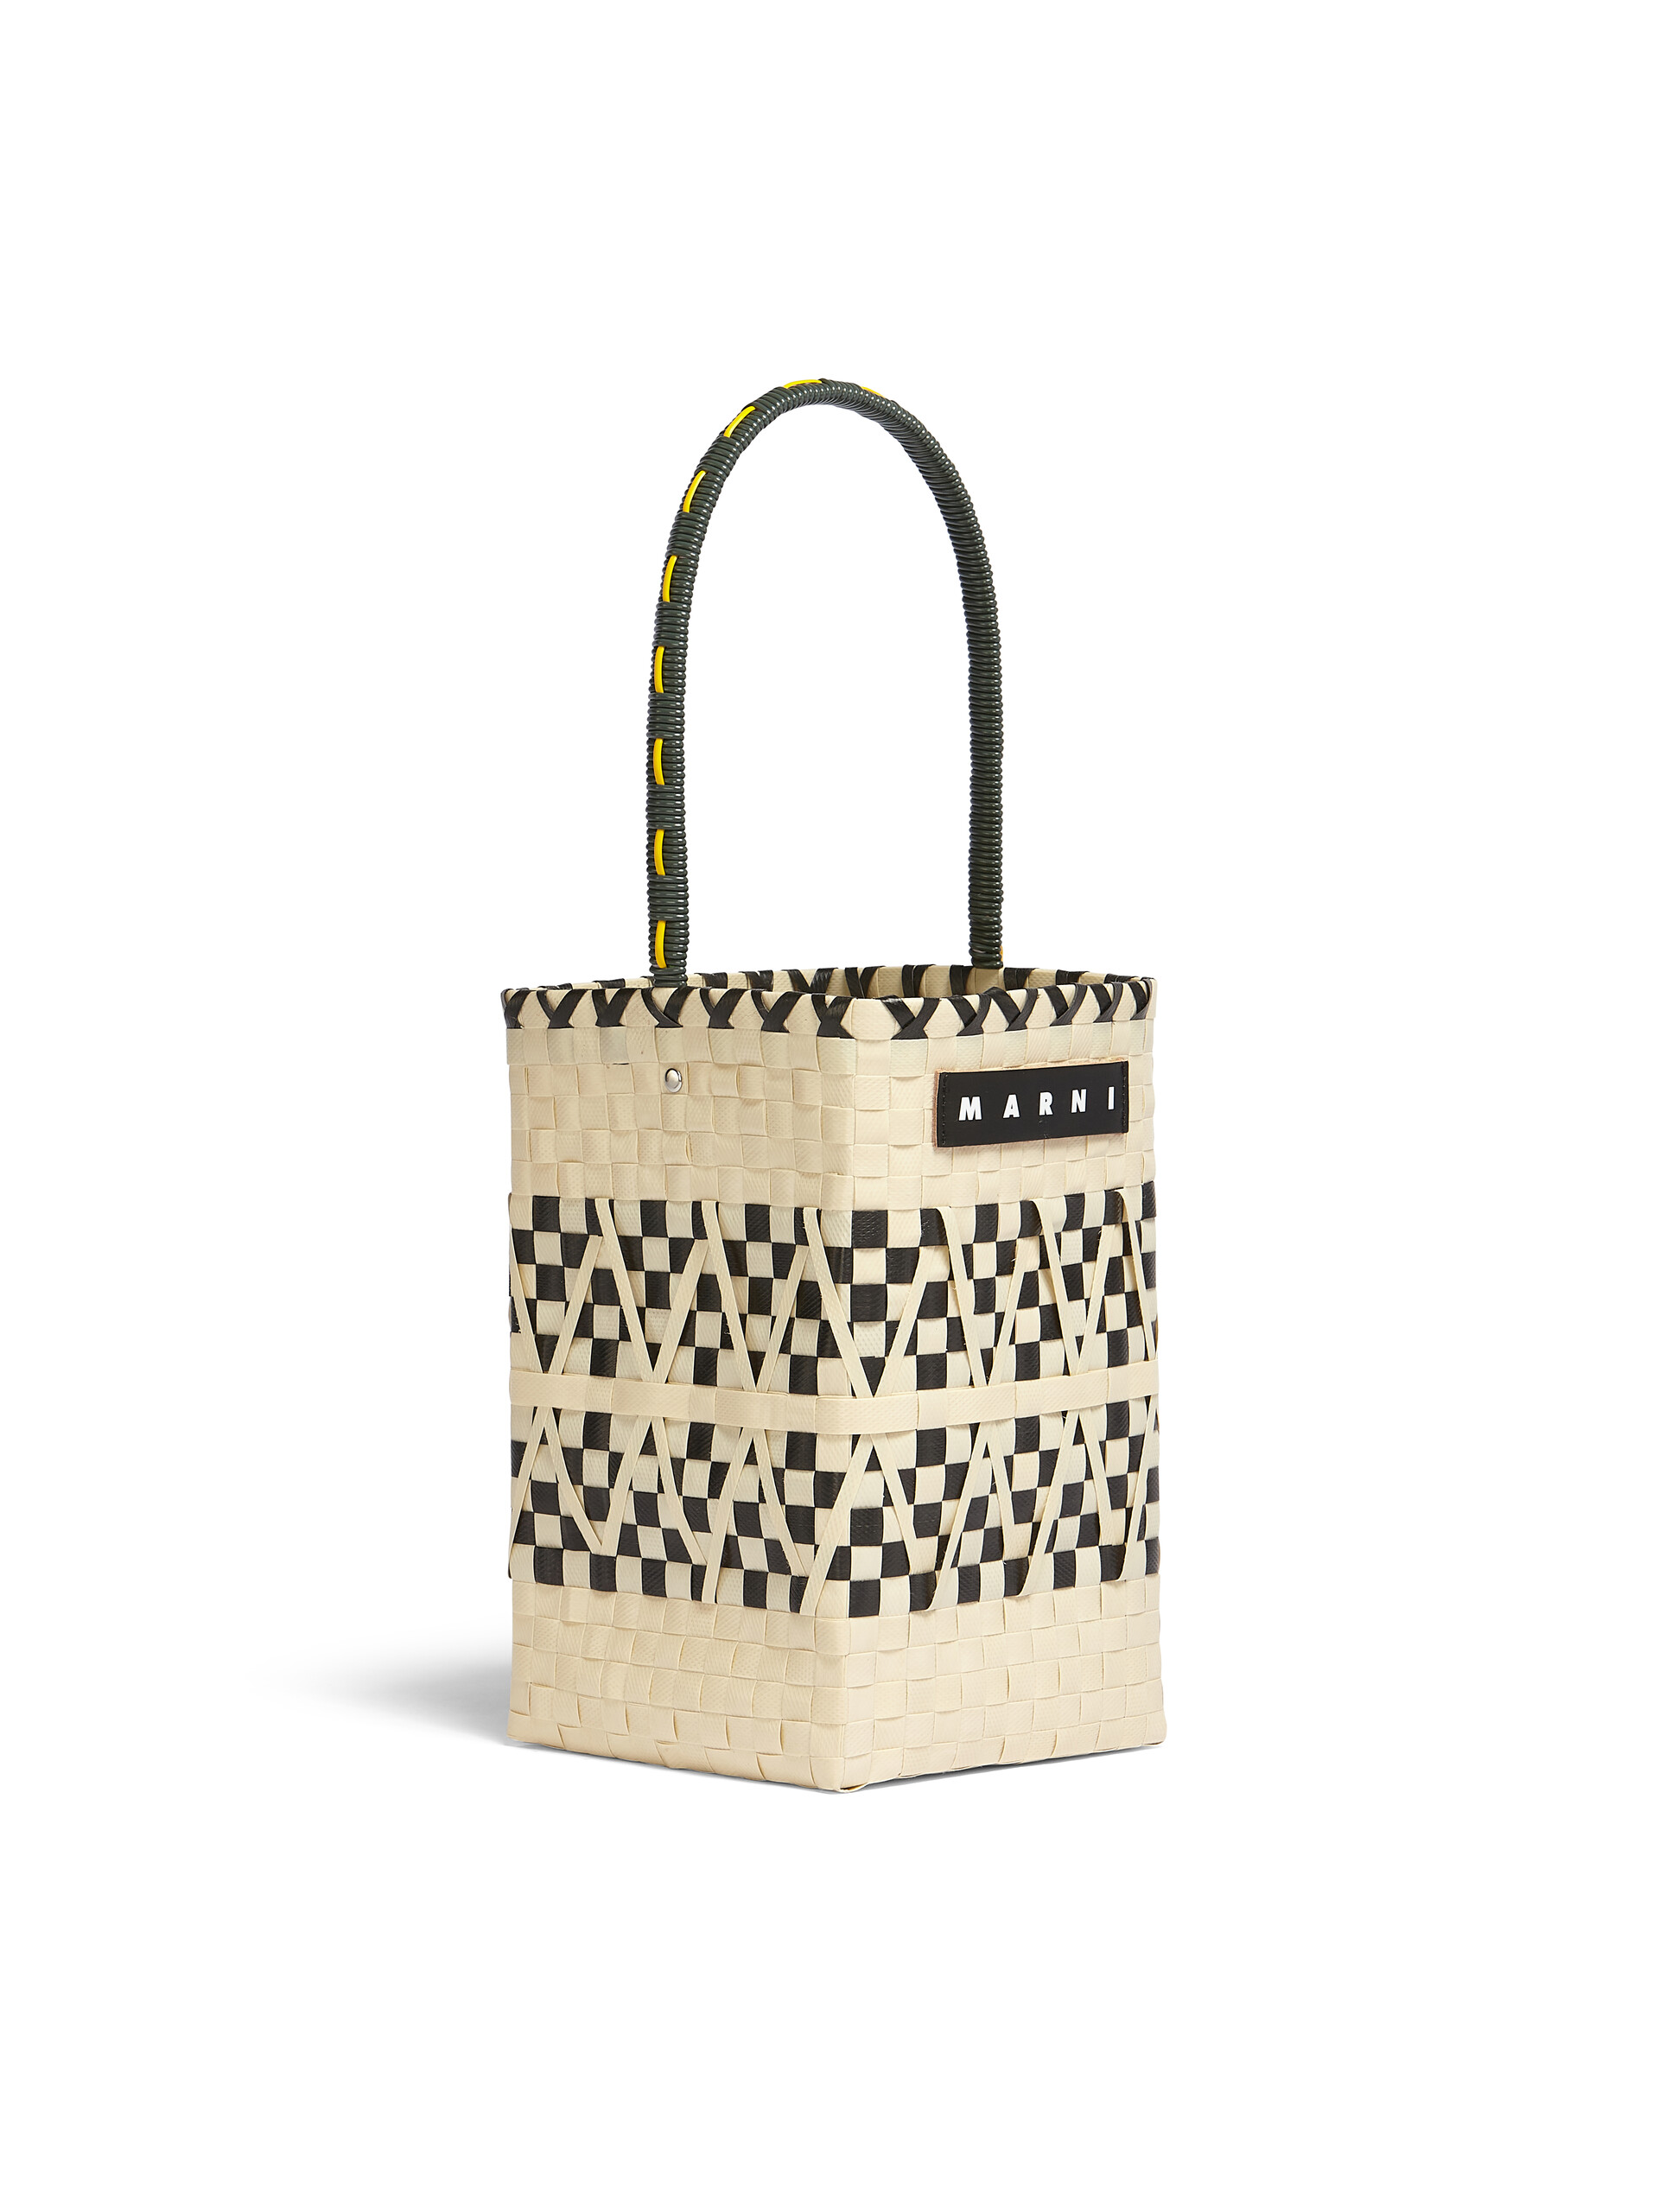 MARNI MARKET STENCIL white and black bucket bag - Shopping Bags - Image 2